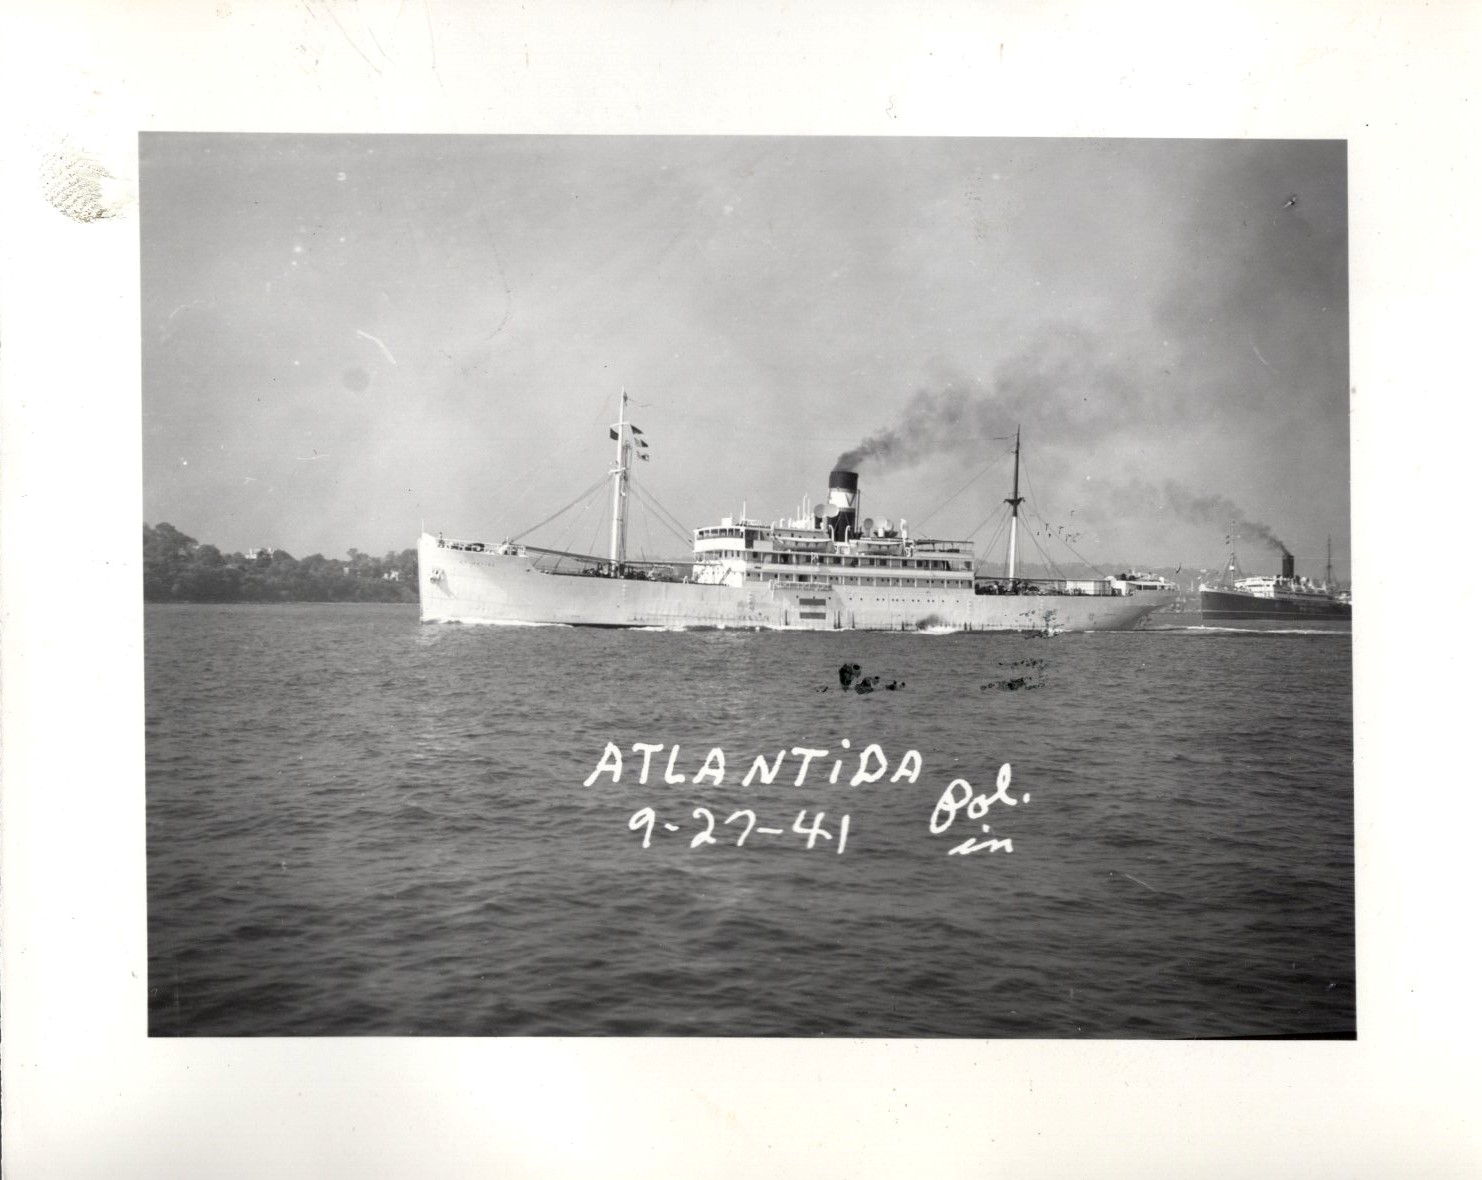 Atlantida_6831_004.jpg